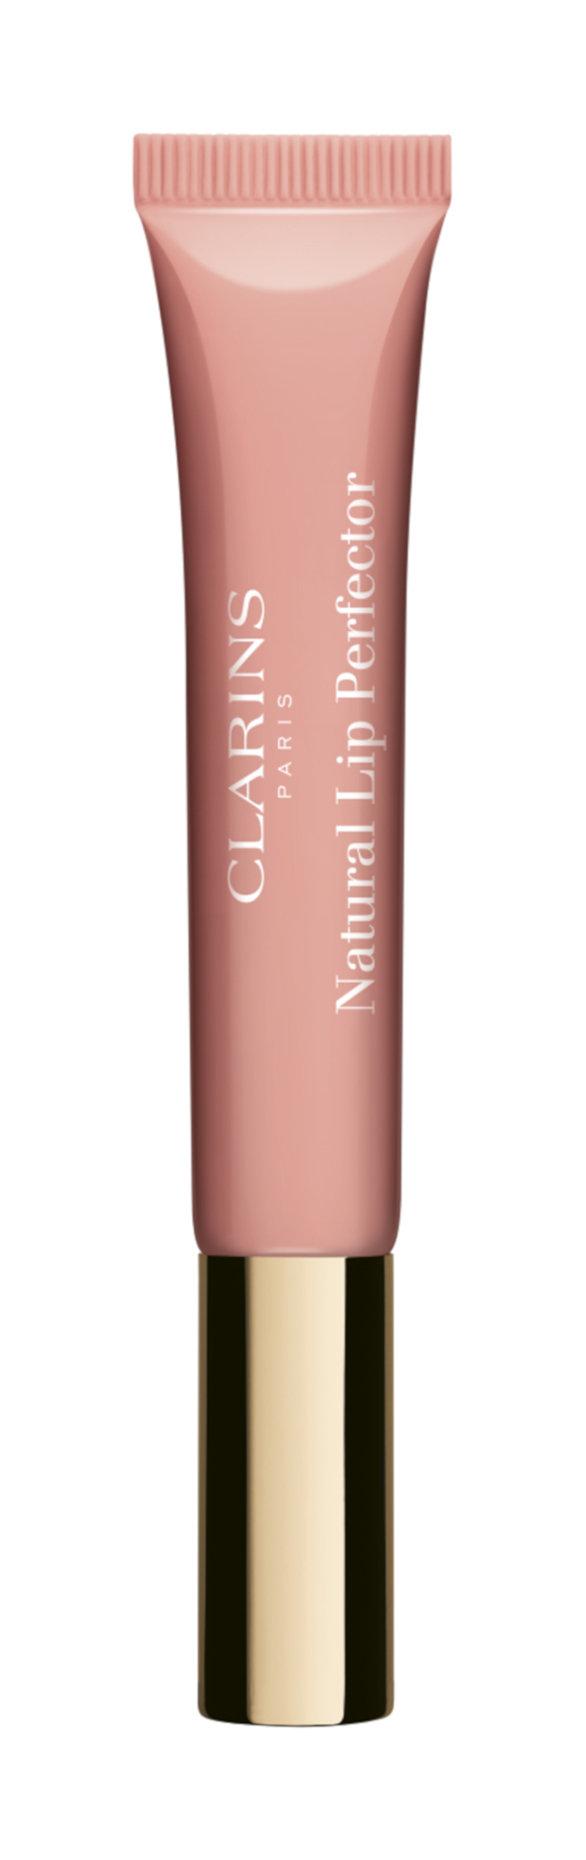 Блеск для губ Clarins Natural Lip Perfector 2 Apricot shimmer, 12 мл